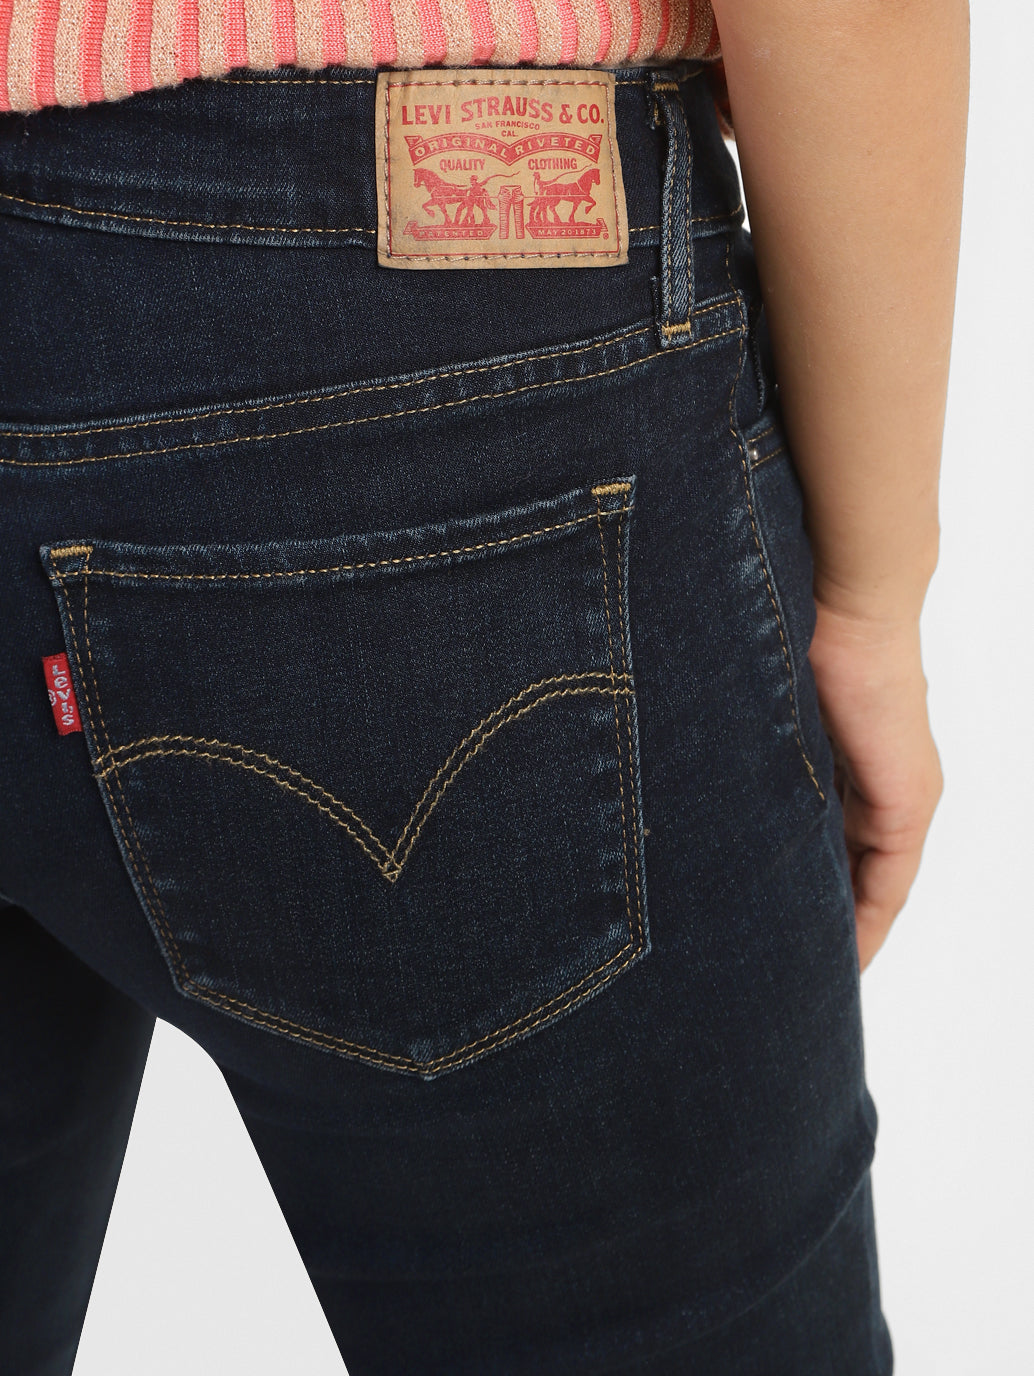 Women's 715 Bootcut Jeans